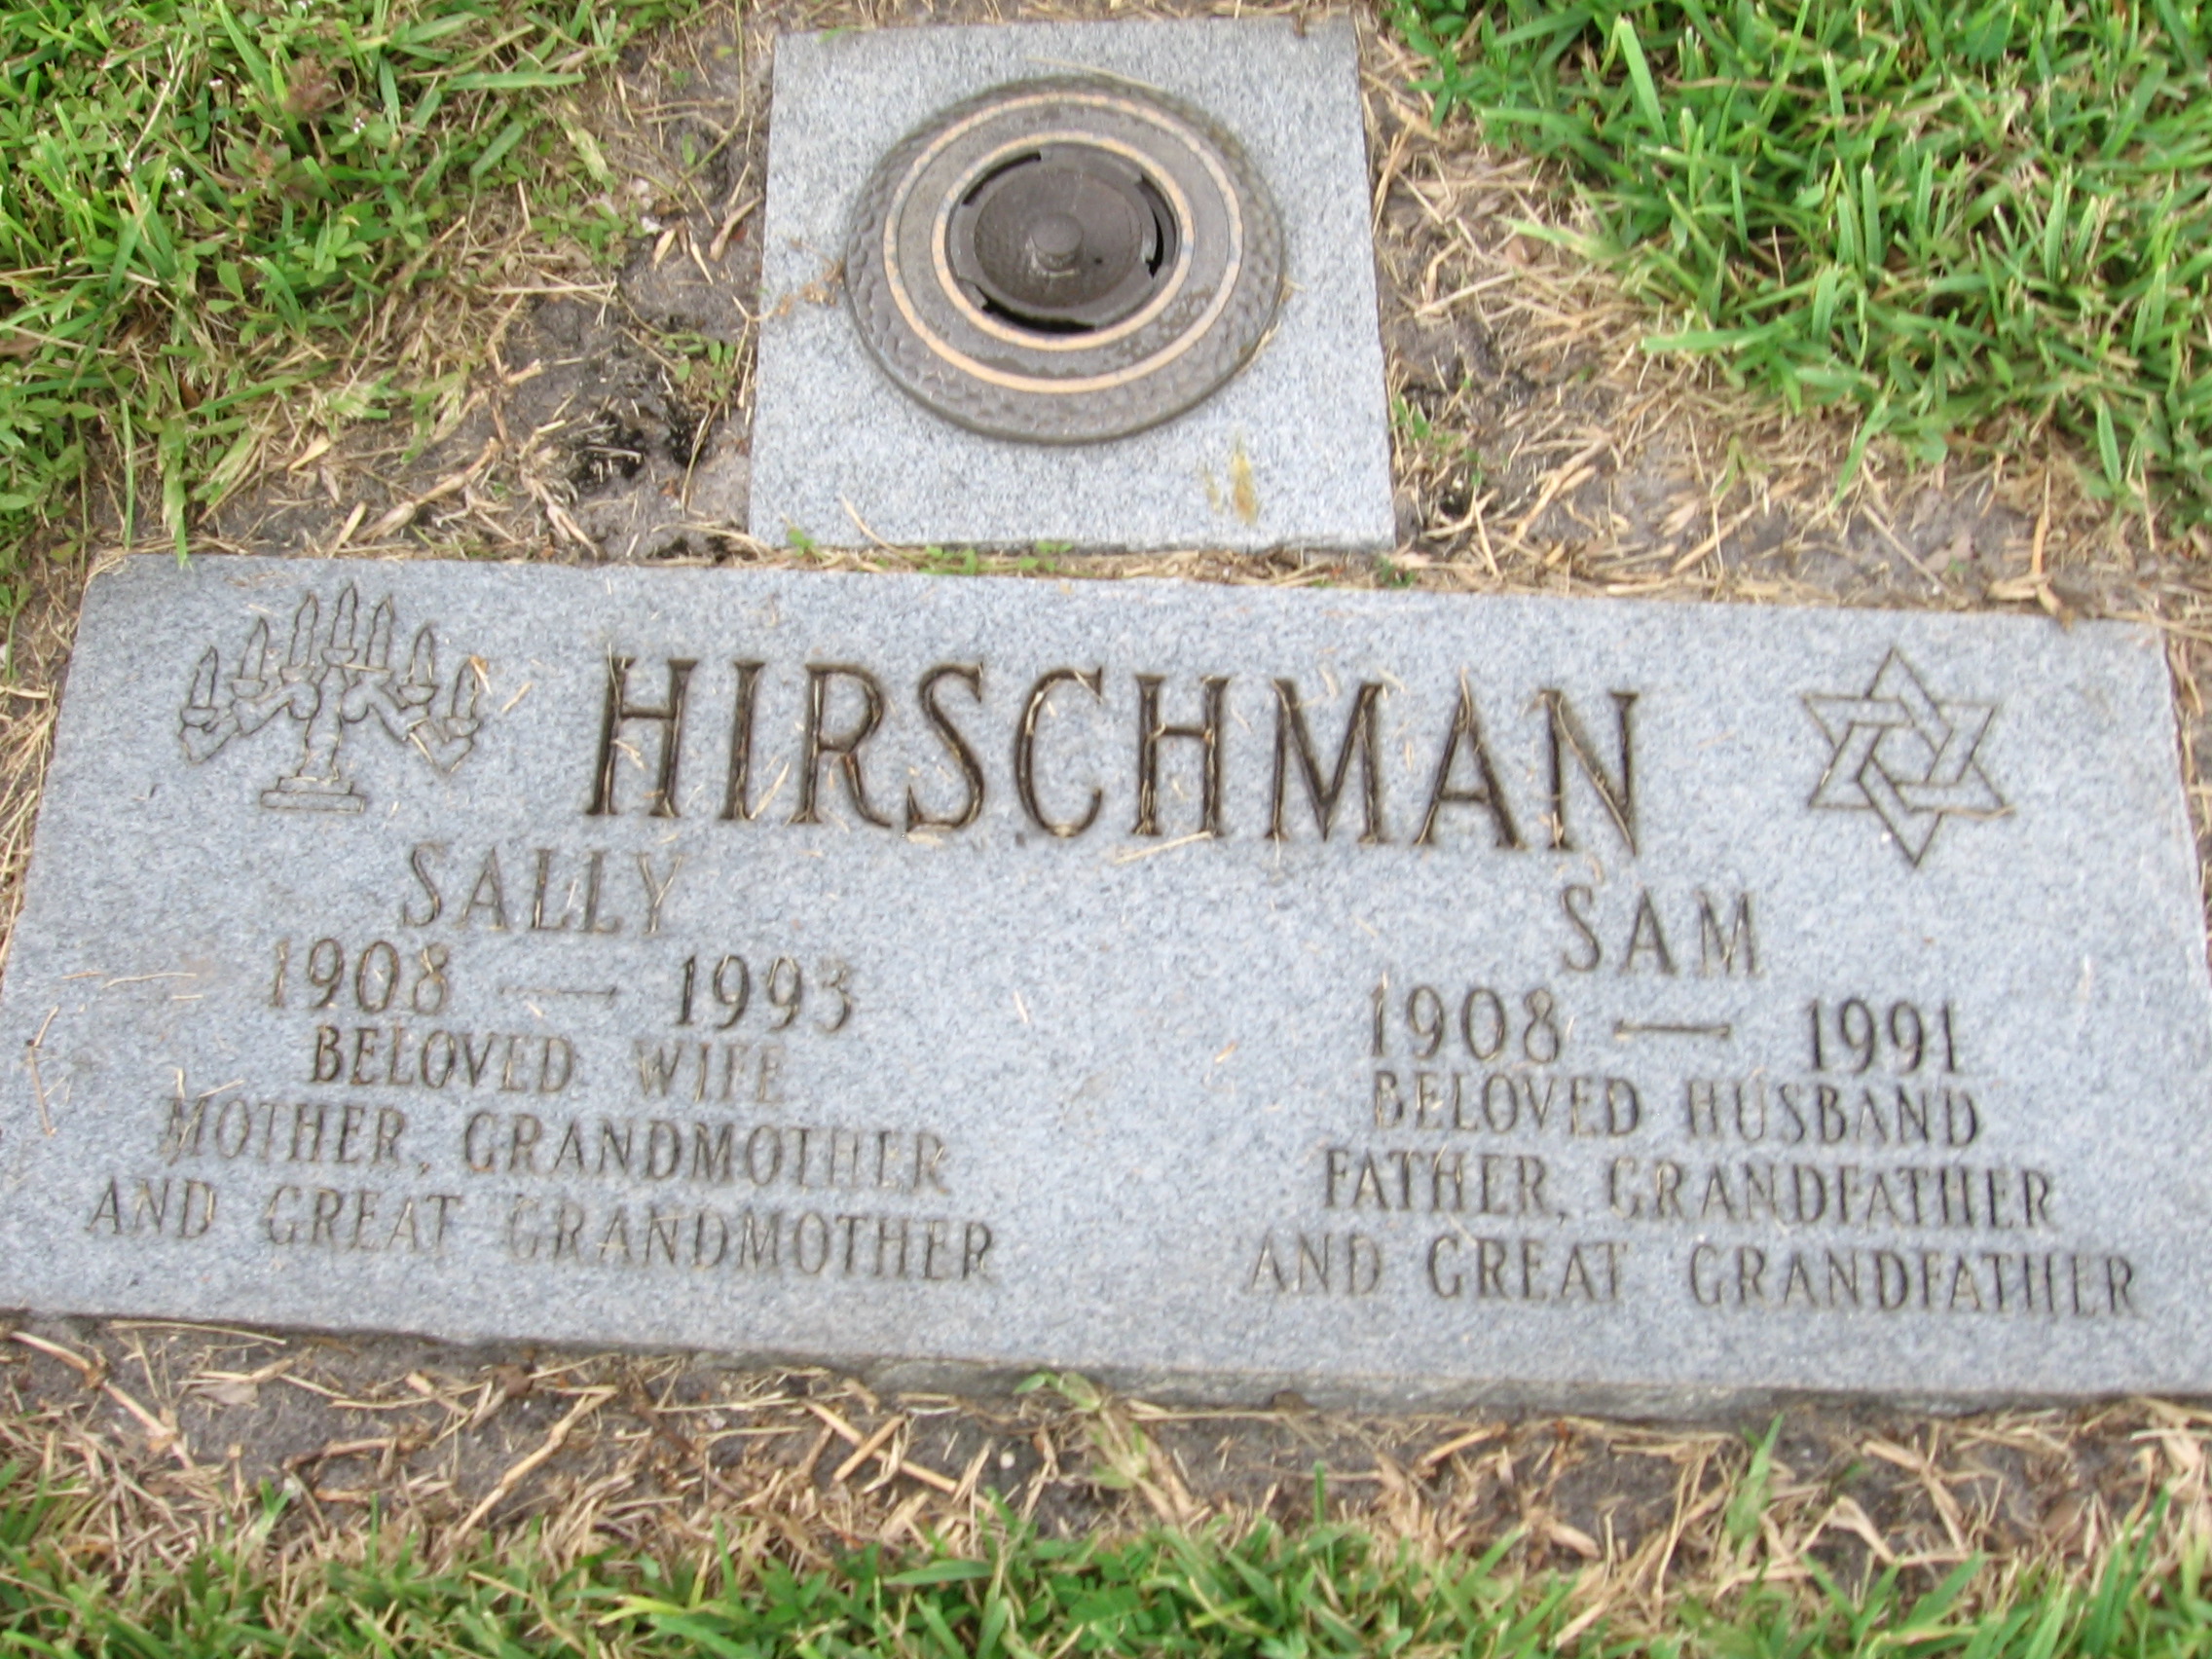 Sam Hirschman